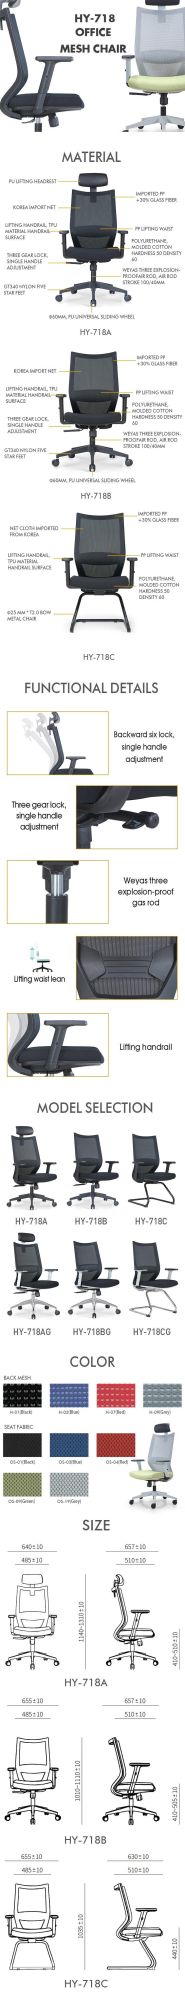 Adjustable Armrest High Denisty Useful Fabric Furniture Computer Office Chair 718